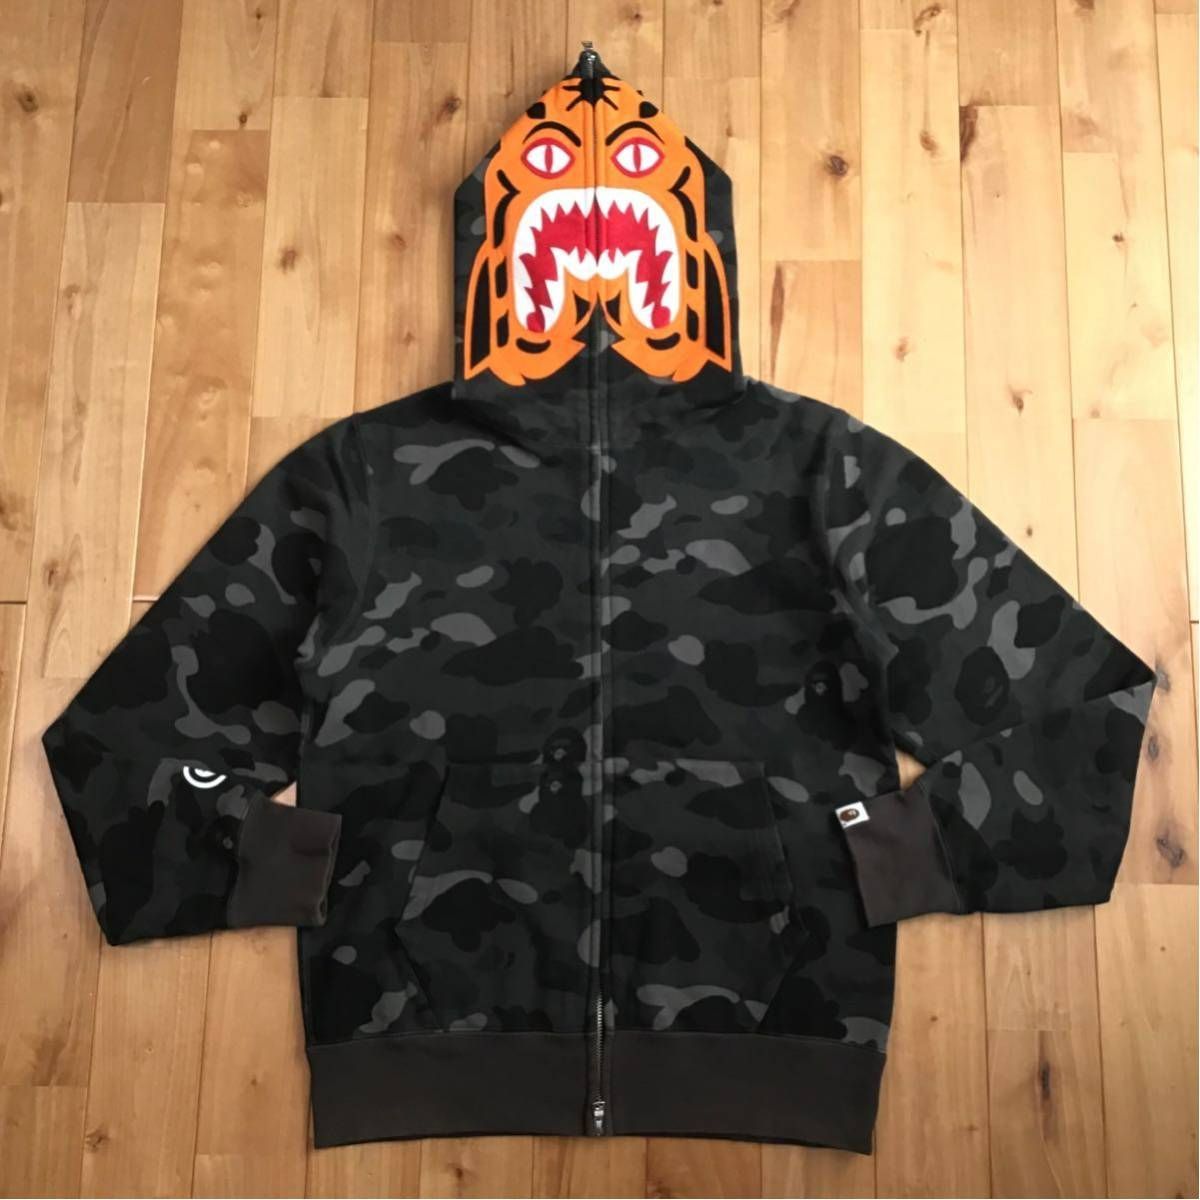 Black camo タイガー パーカー Mサイズ tiger full zip hoodie a bathing ape BAPE エイプ ベイプ  アベイシングエイプ 迷彩